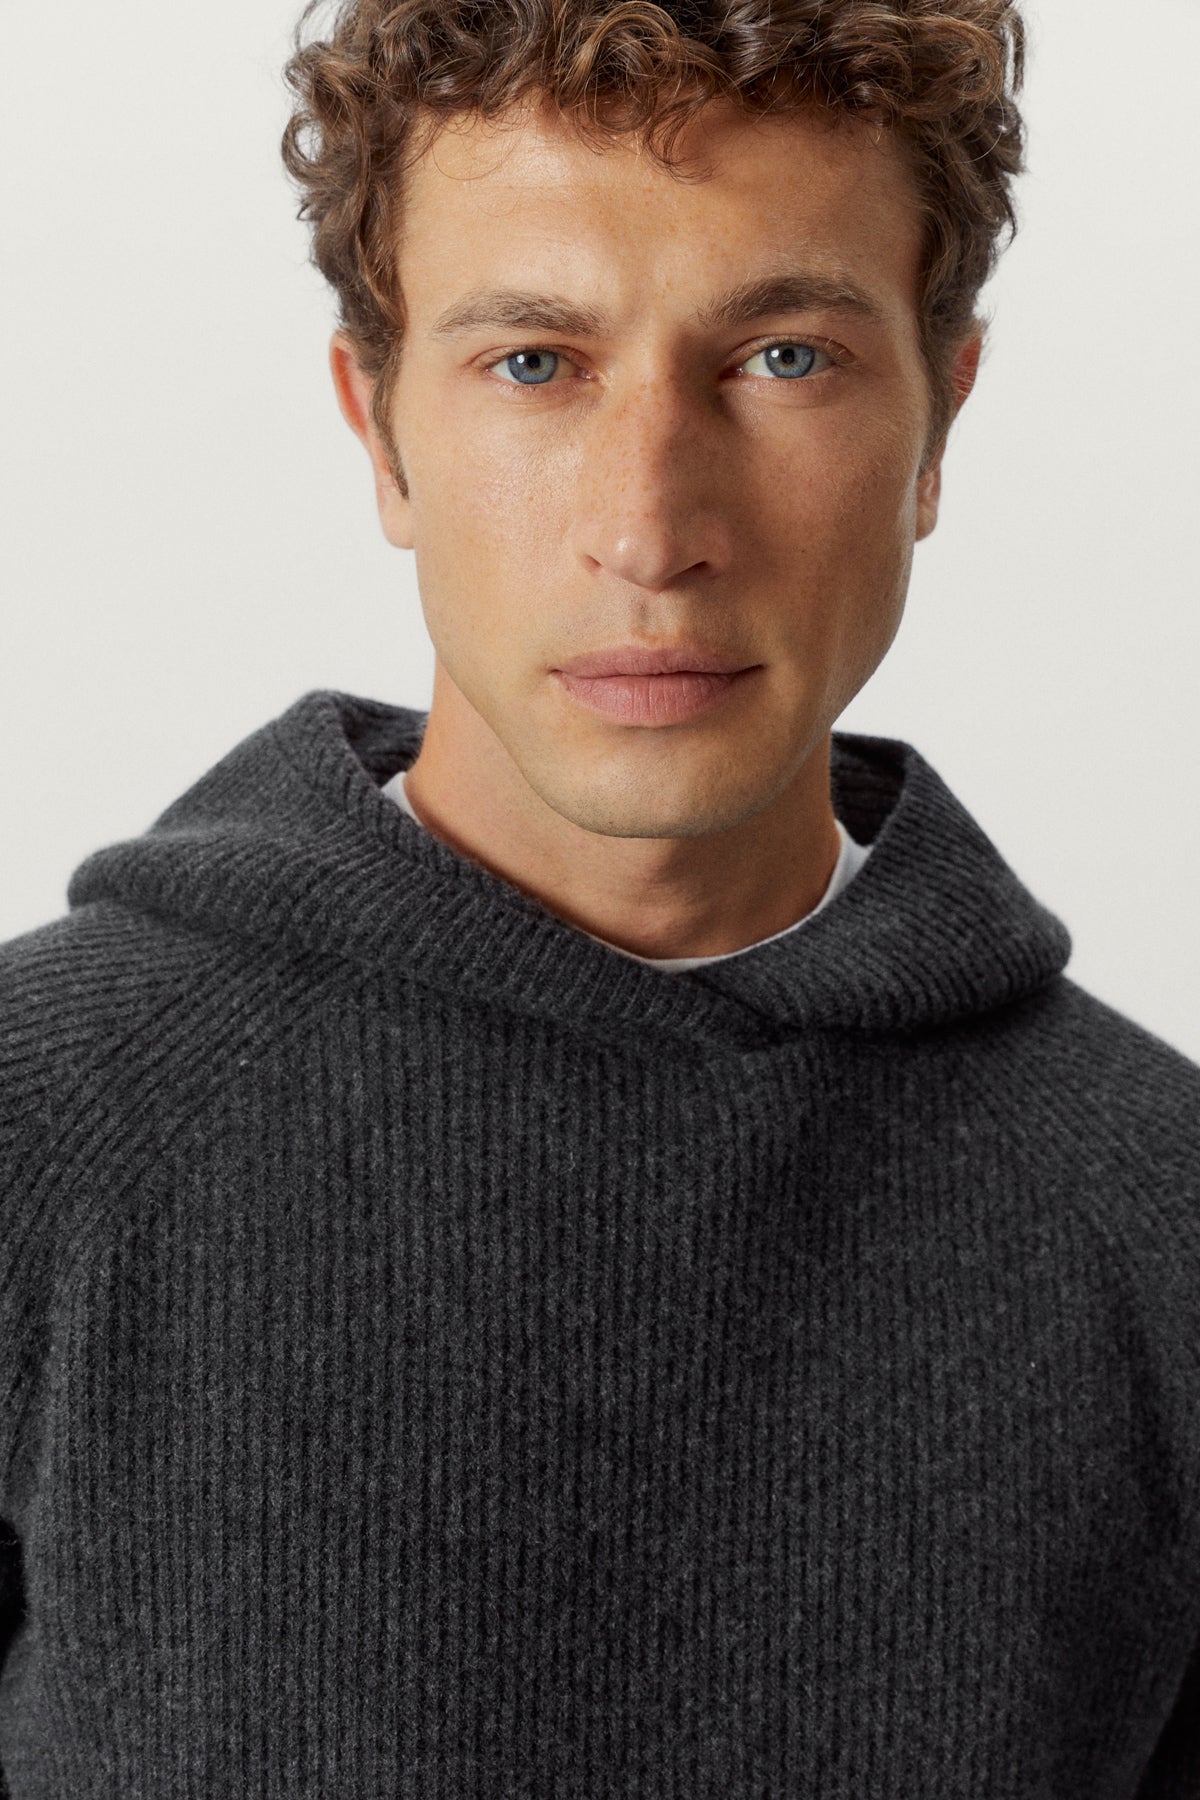 the woolen ribbed hoodie sweater ash grey